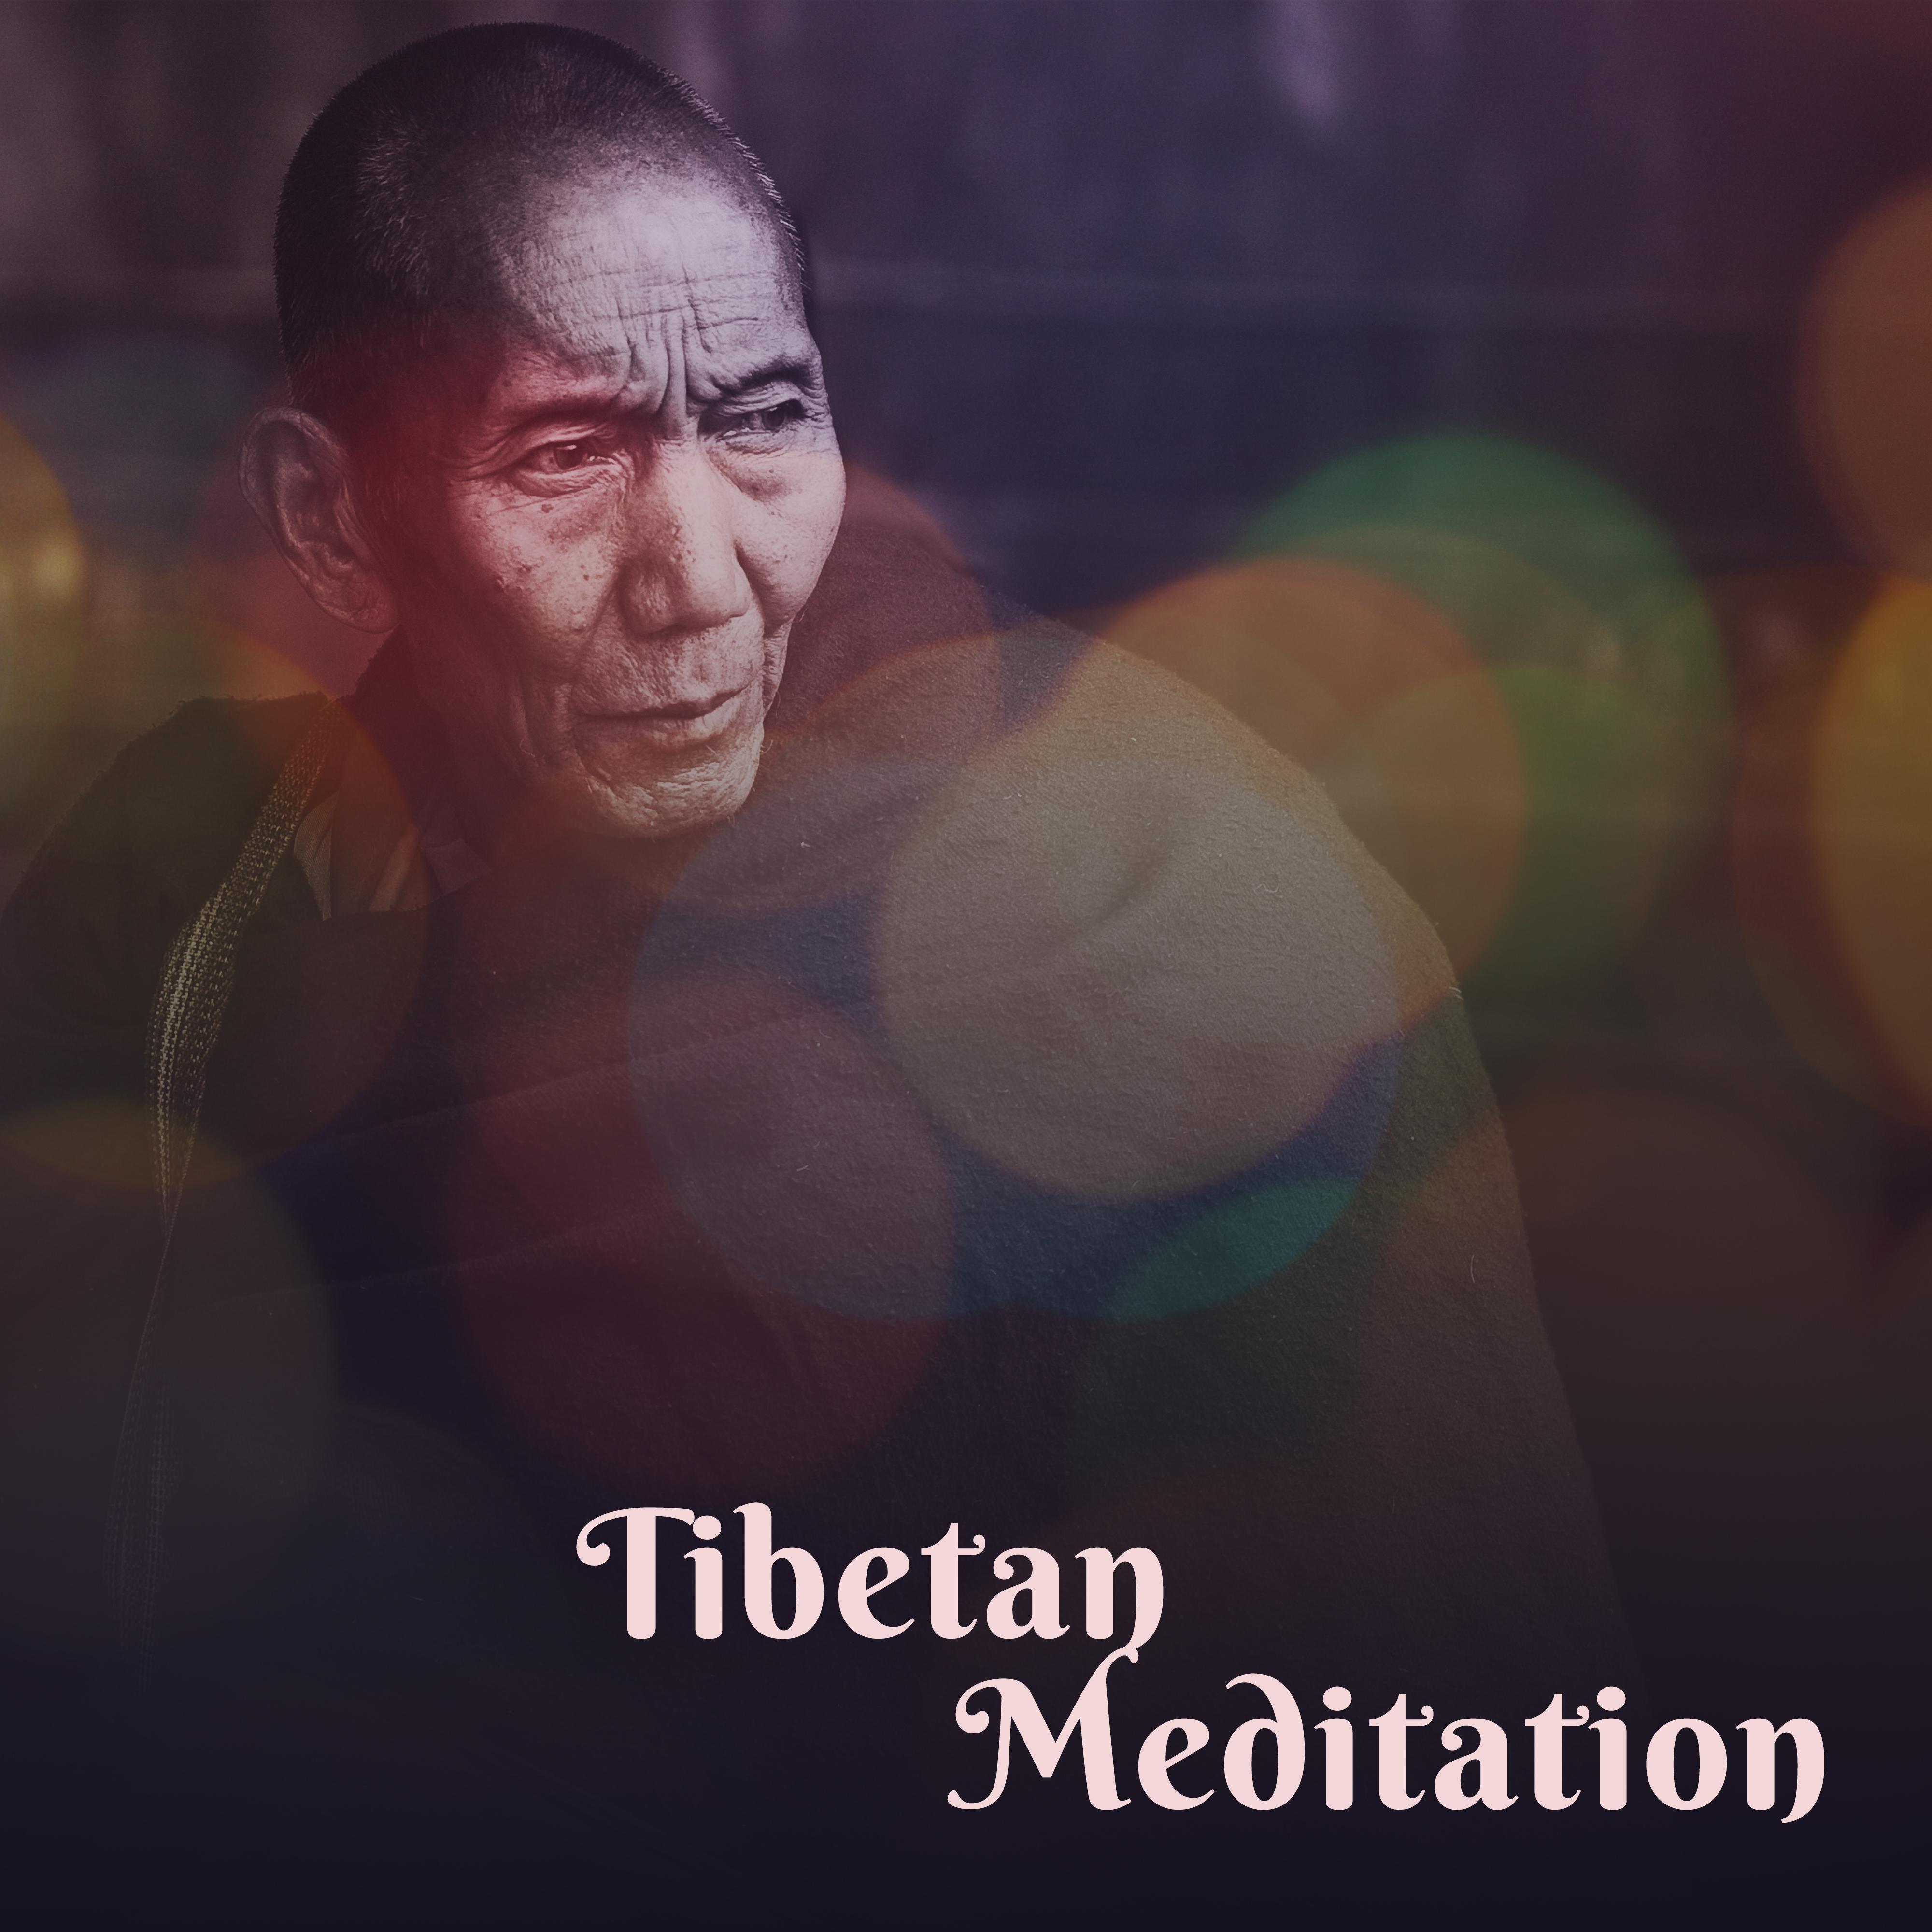 Tibetan Meditation – Relaxing Music for Yoga, Healing, Kundalini, Reiki Music to Calm Down, Chakra Balancing, Hatha Yoga